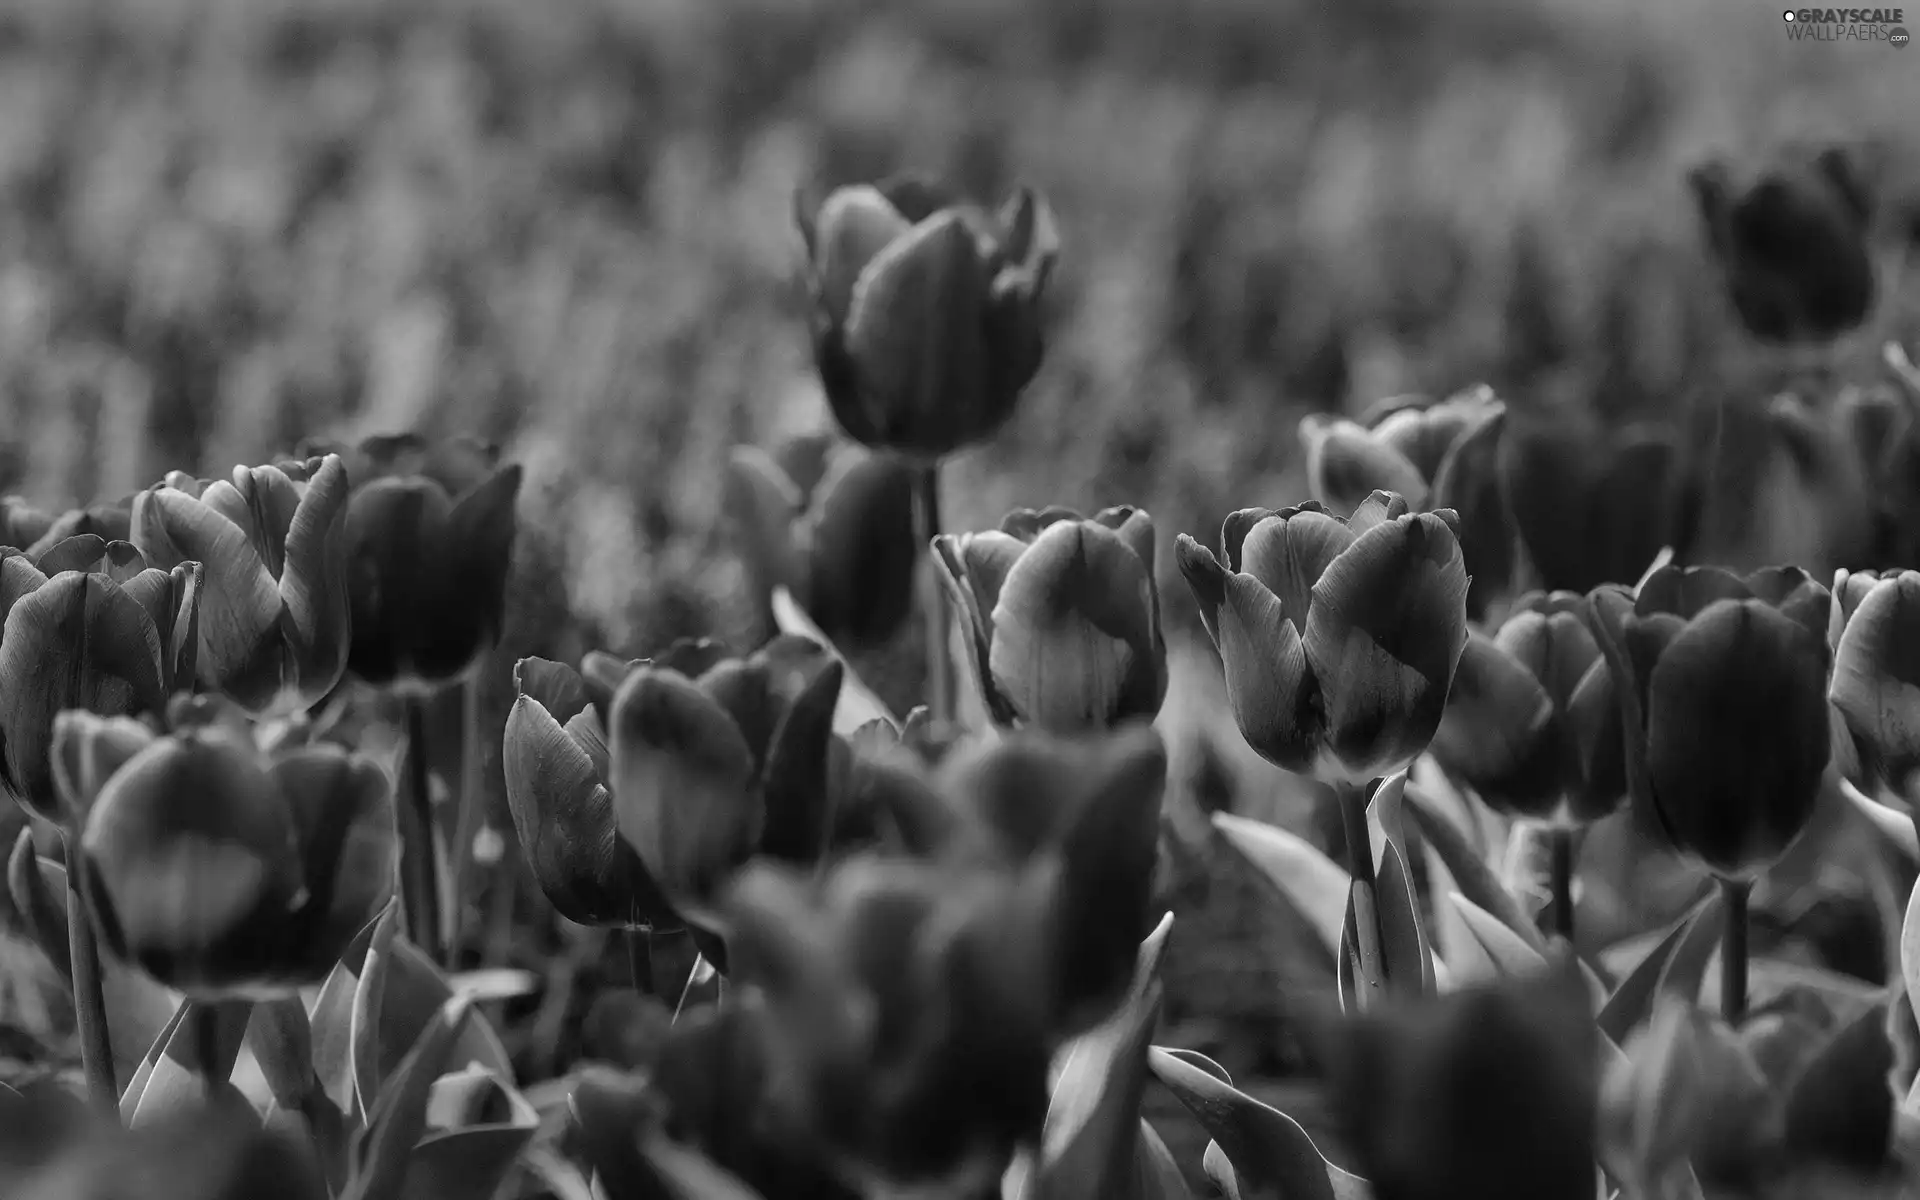 purple, Tulips